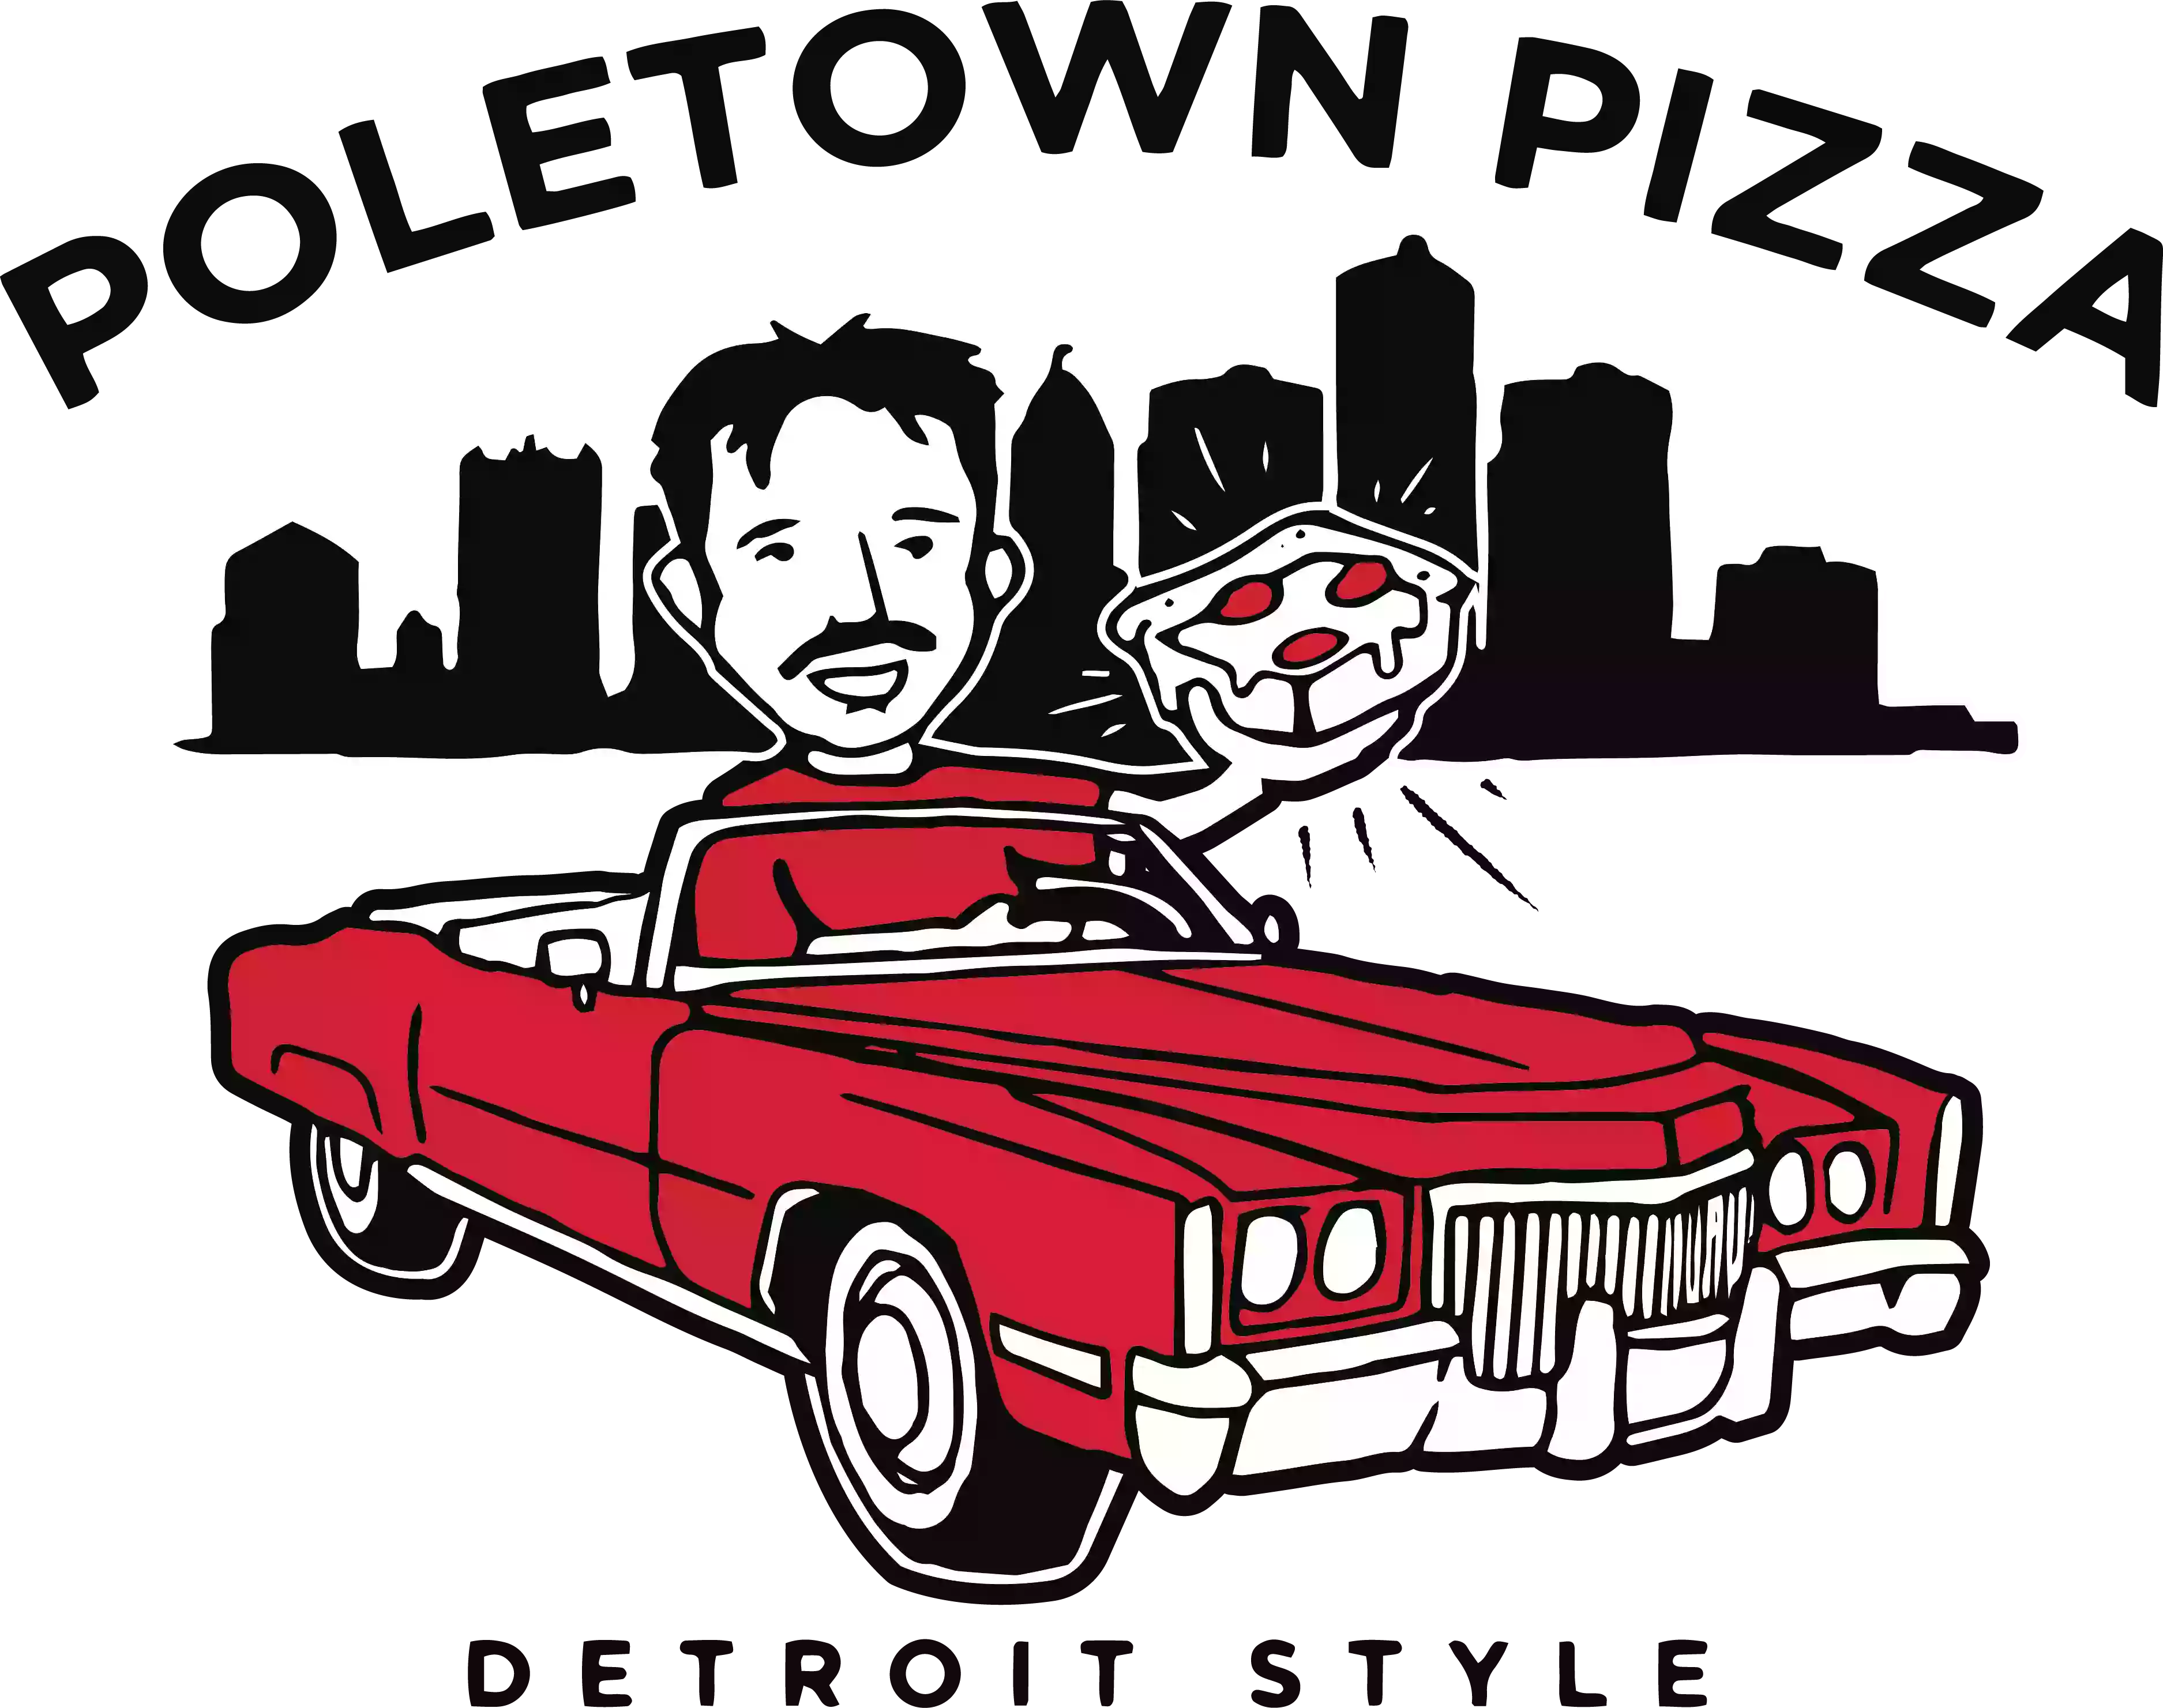 Poletown Pizza